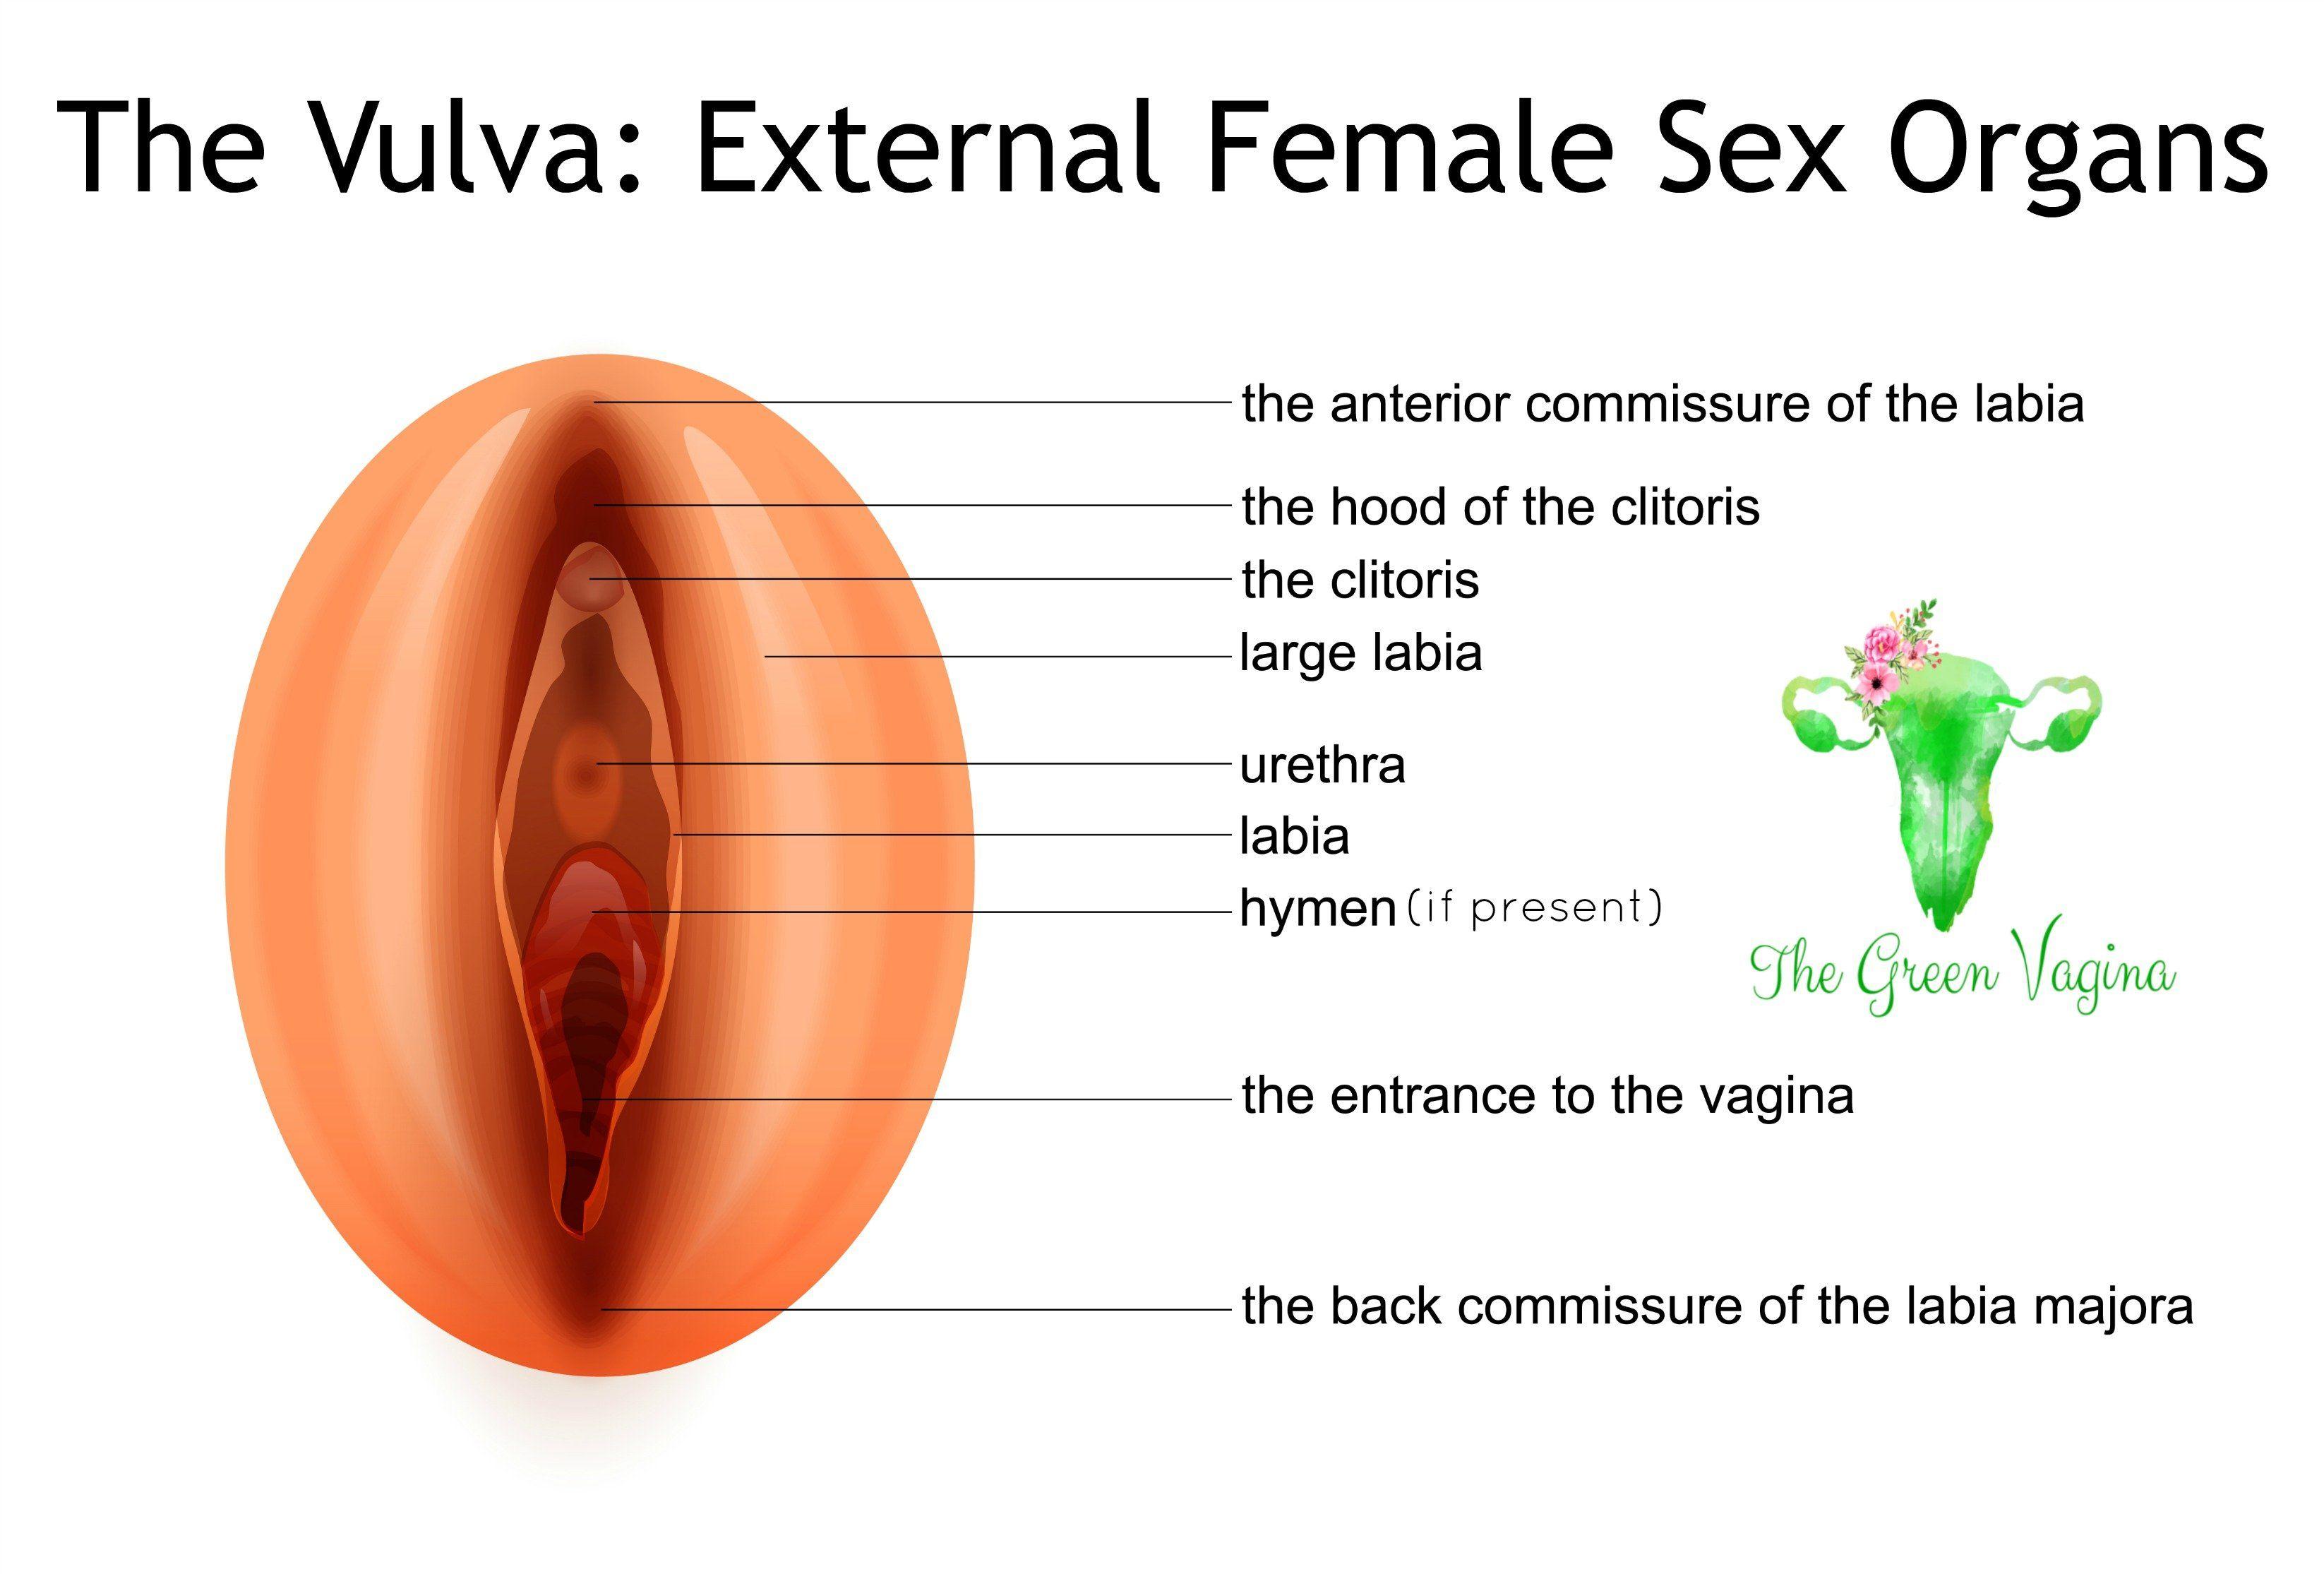 Vulva image 